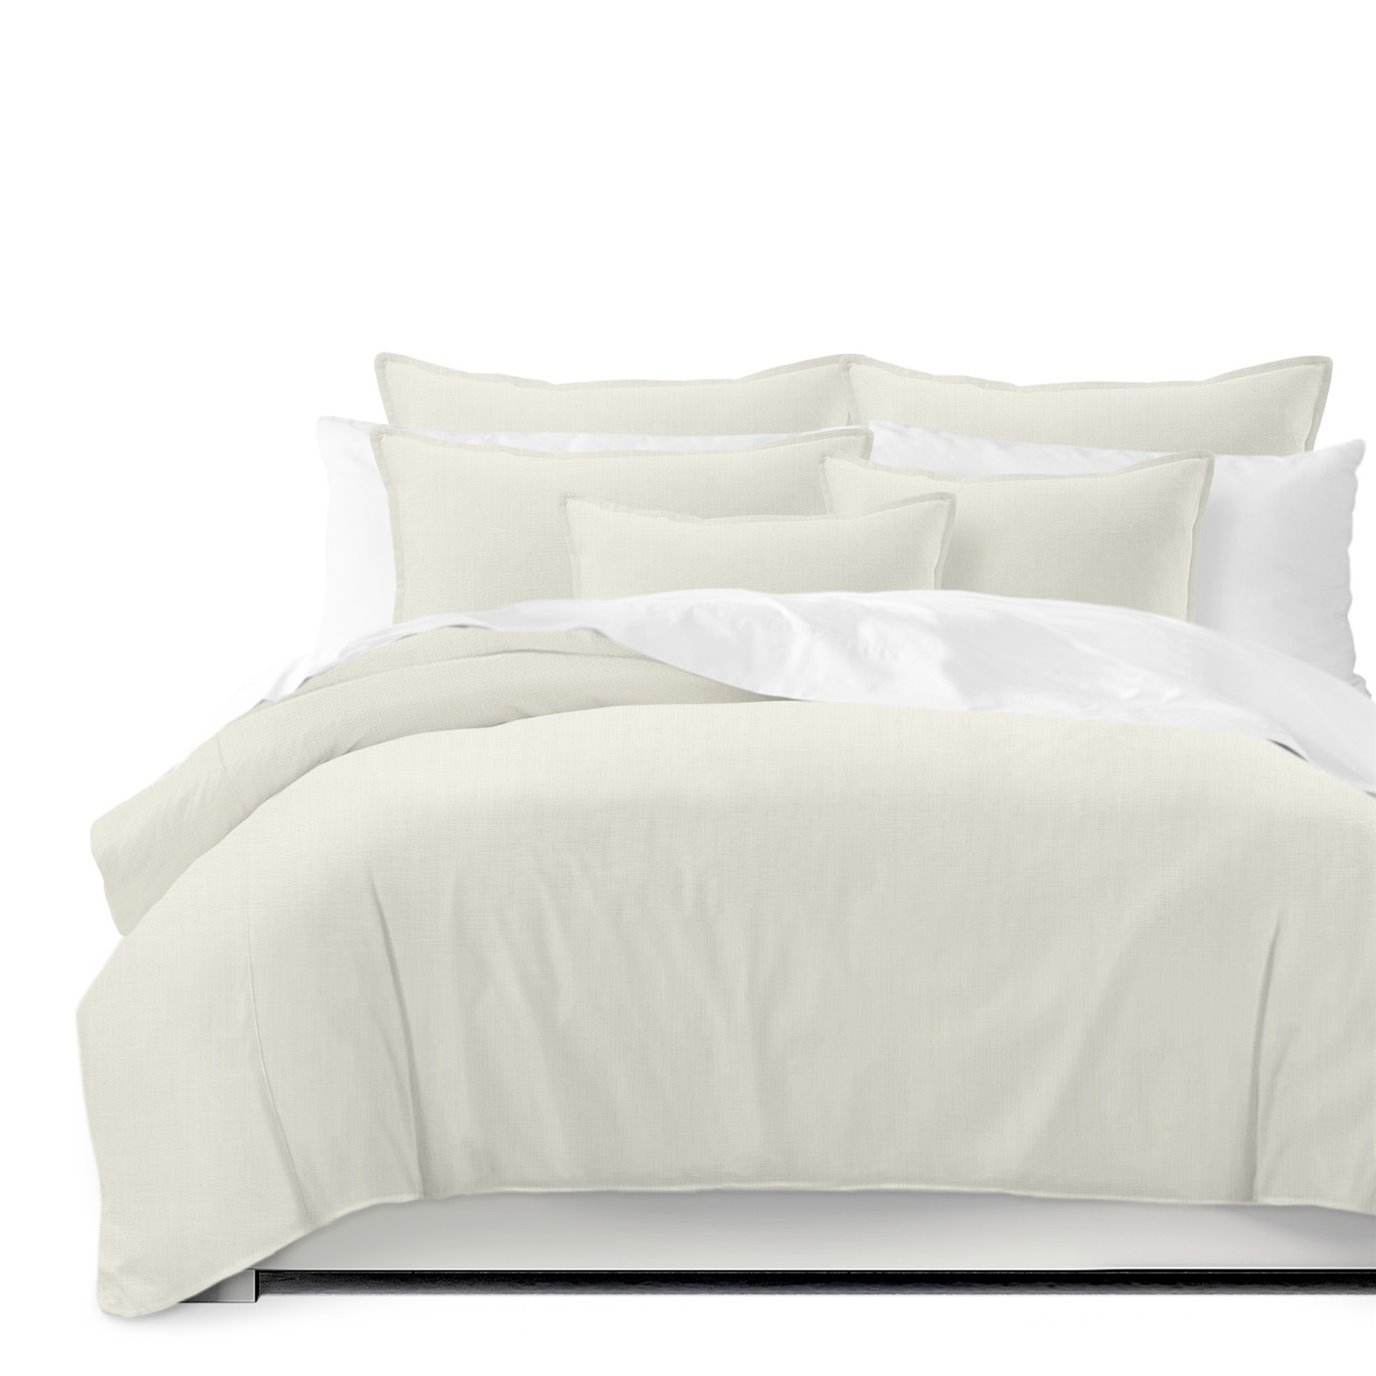 Ancebridge Vanilla Comforter and Pillow Sham(s) Set - Size Twin